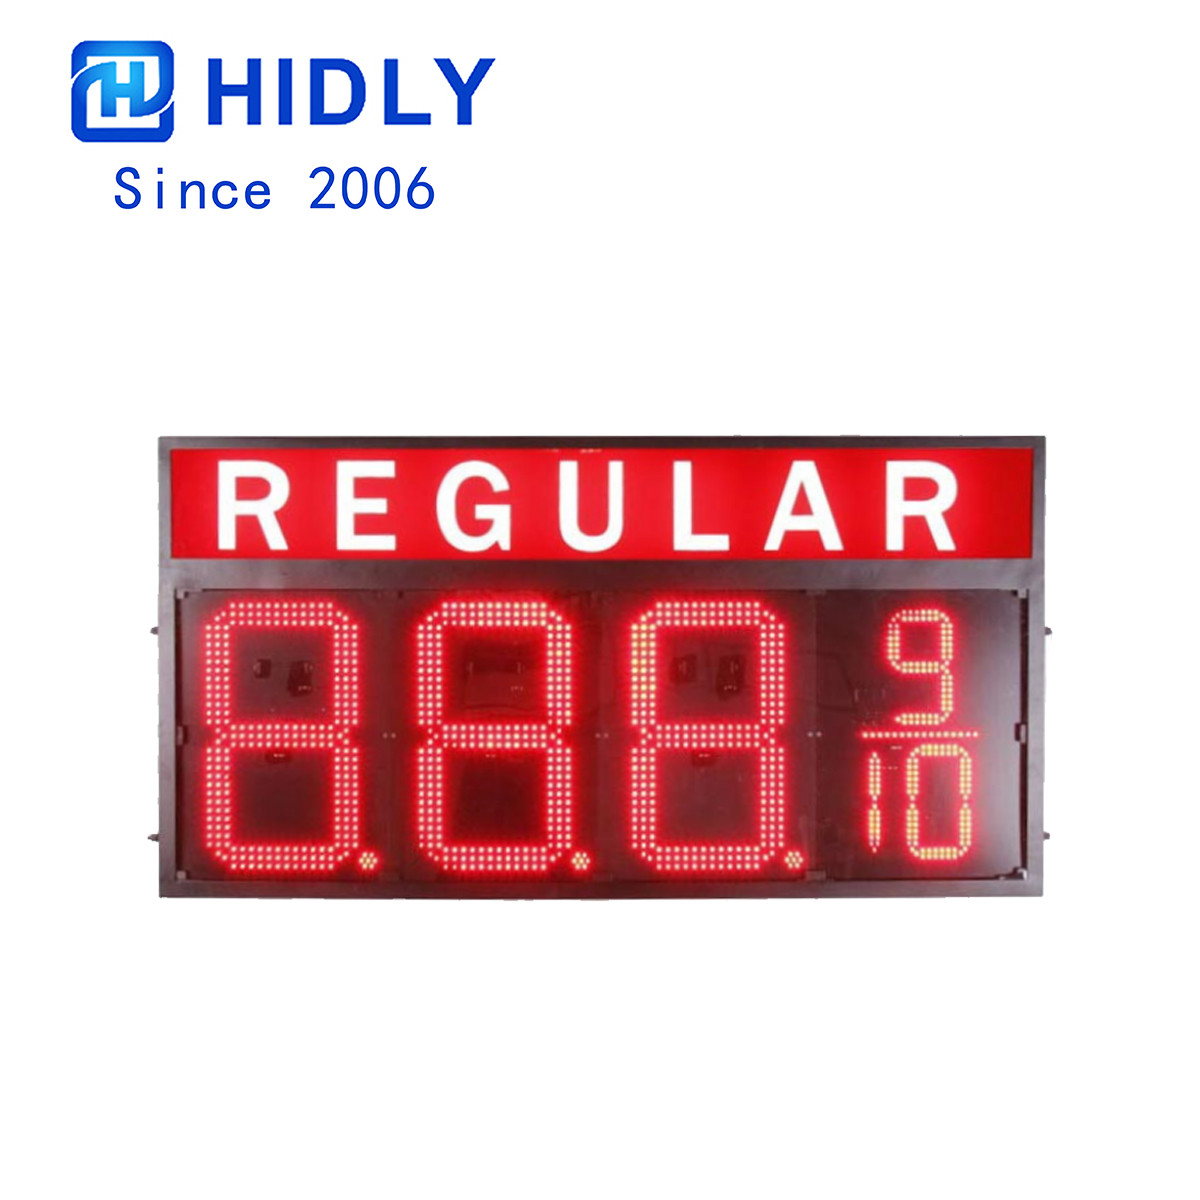 American REGULAR LED gas price signs